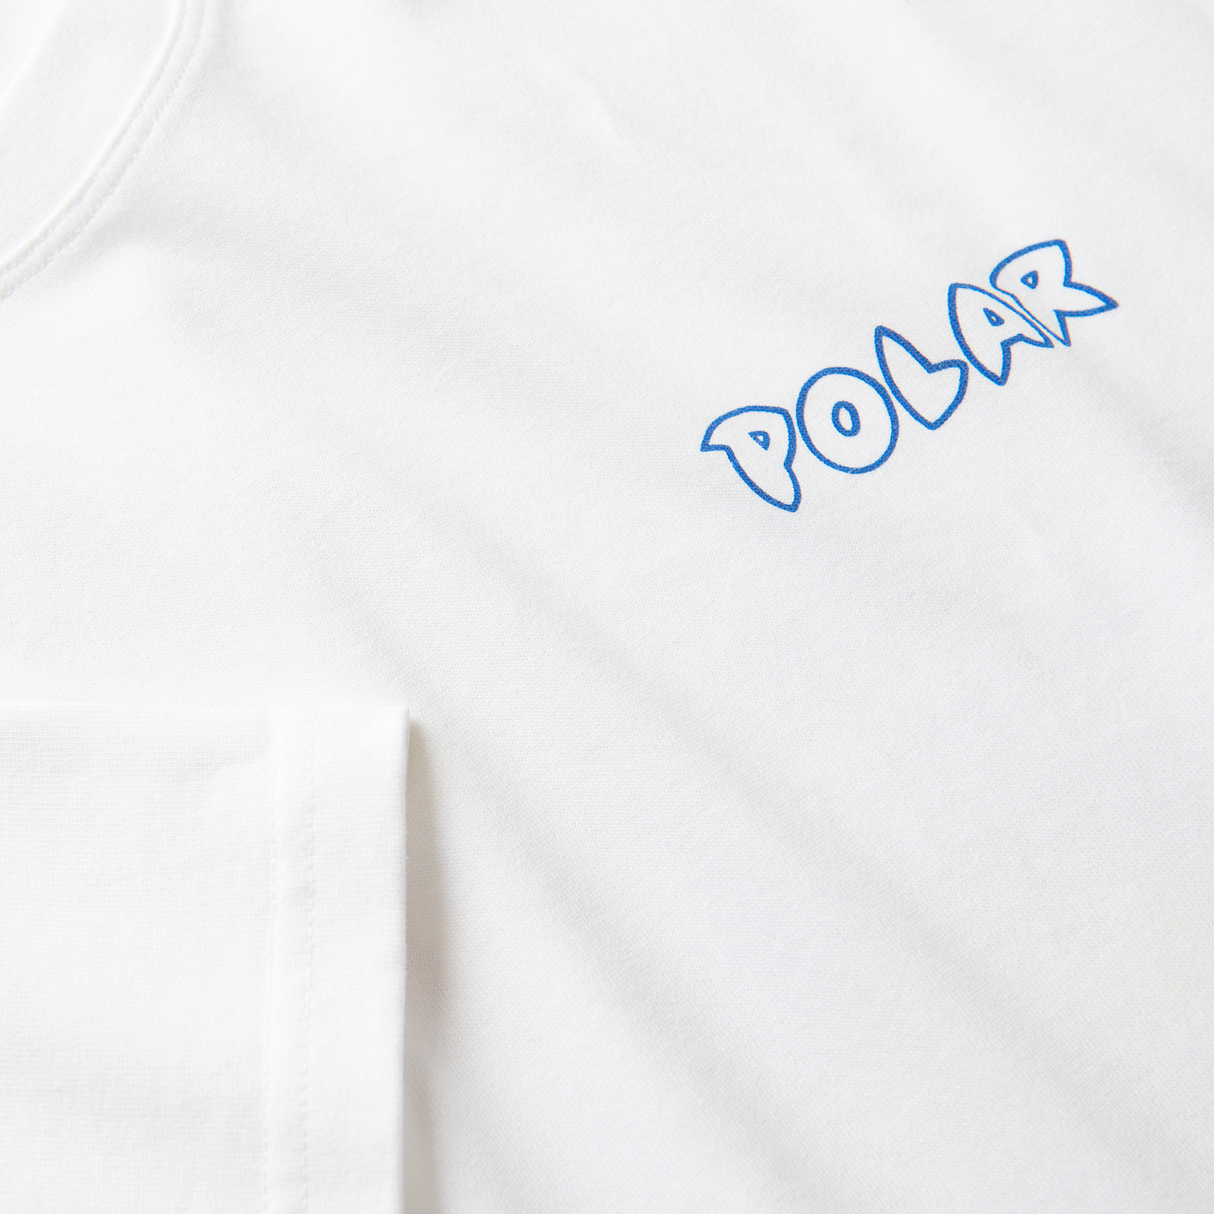 Polar Crash White S/s Shirt